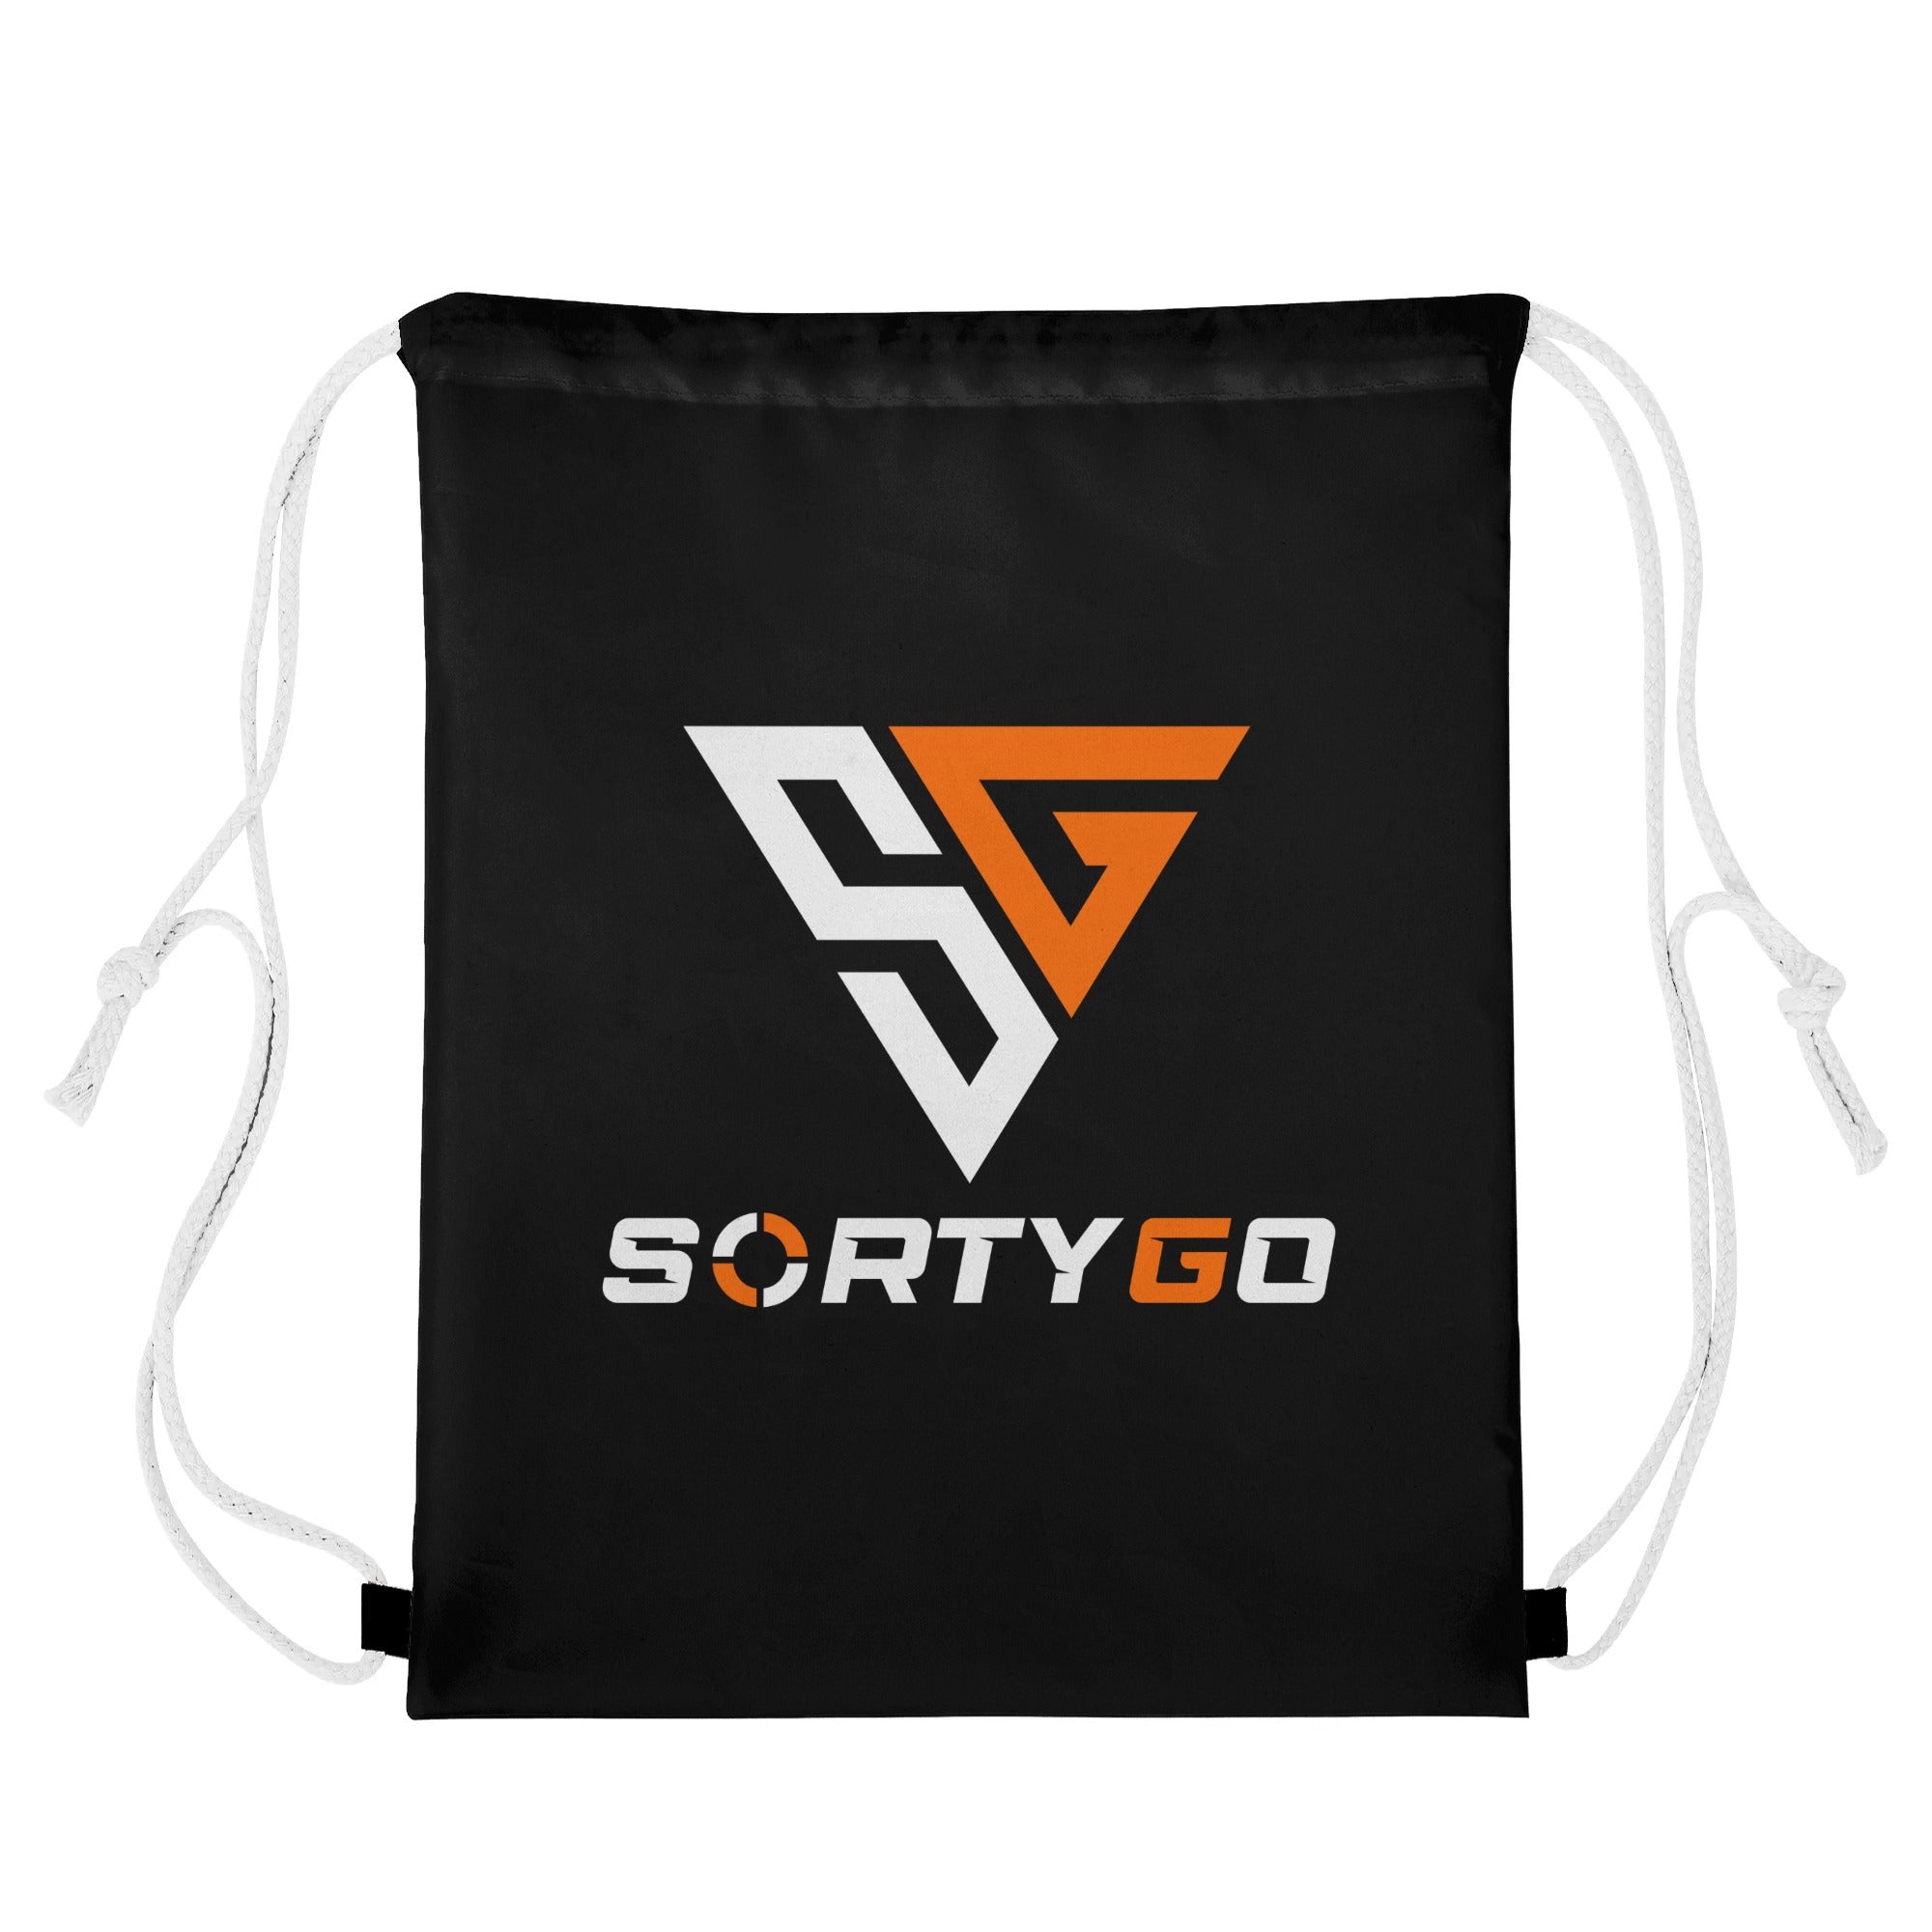 SORTYGO - Mystique Drawstring Bag in